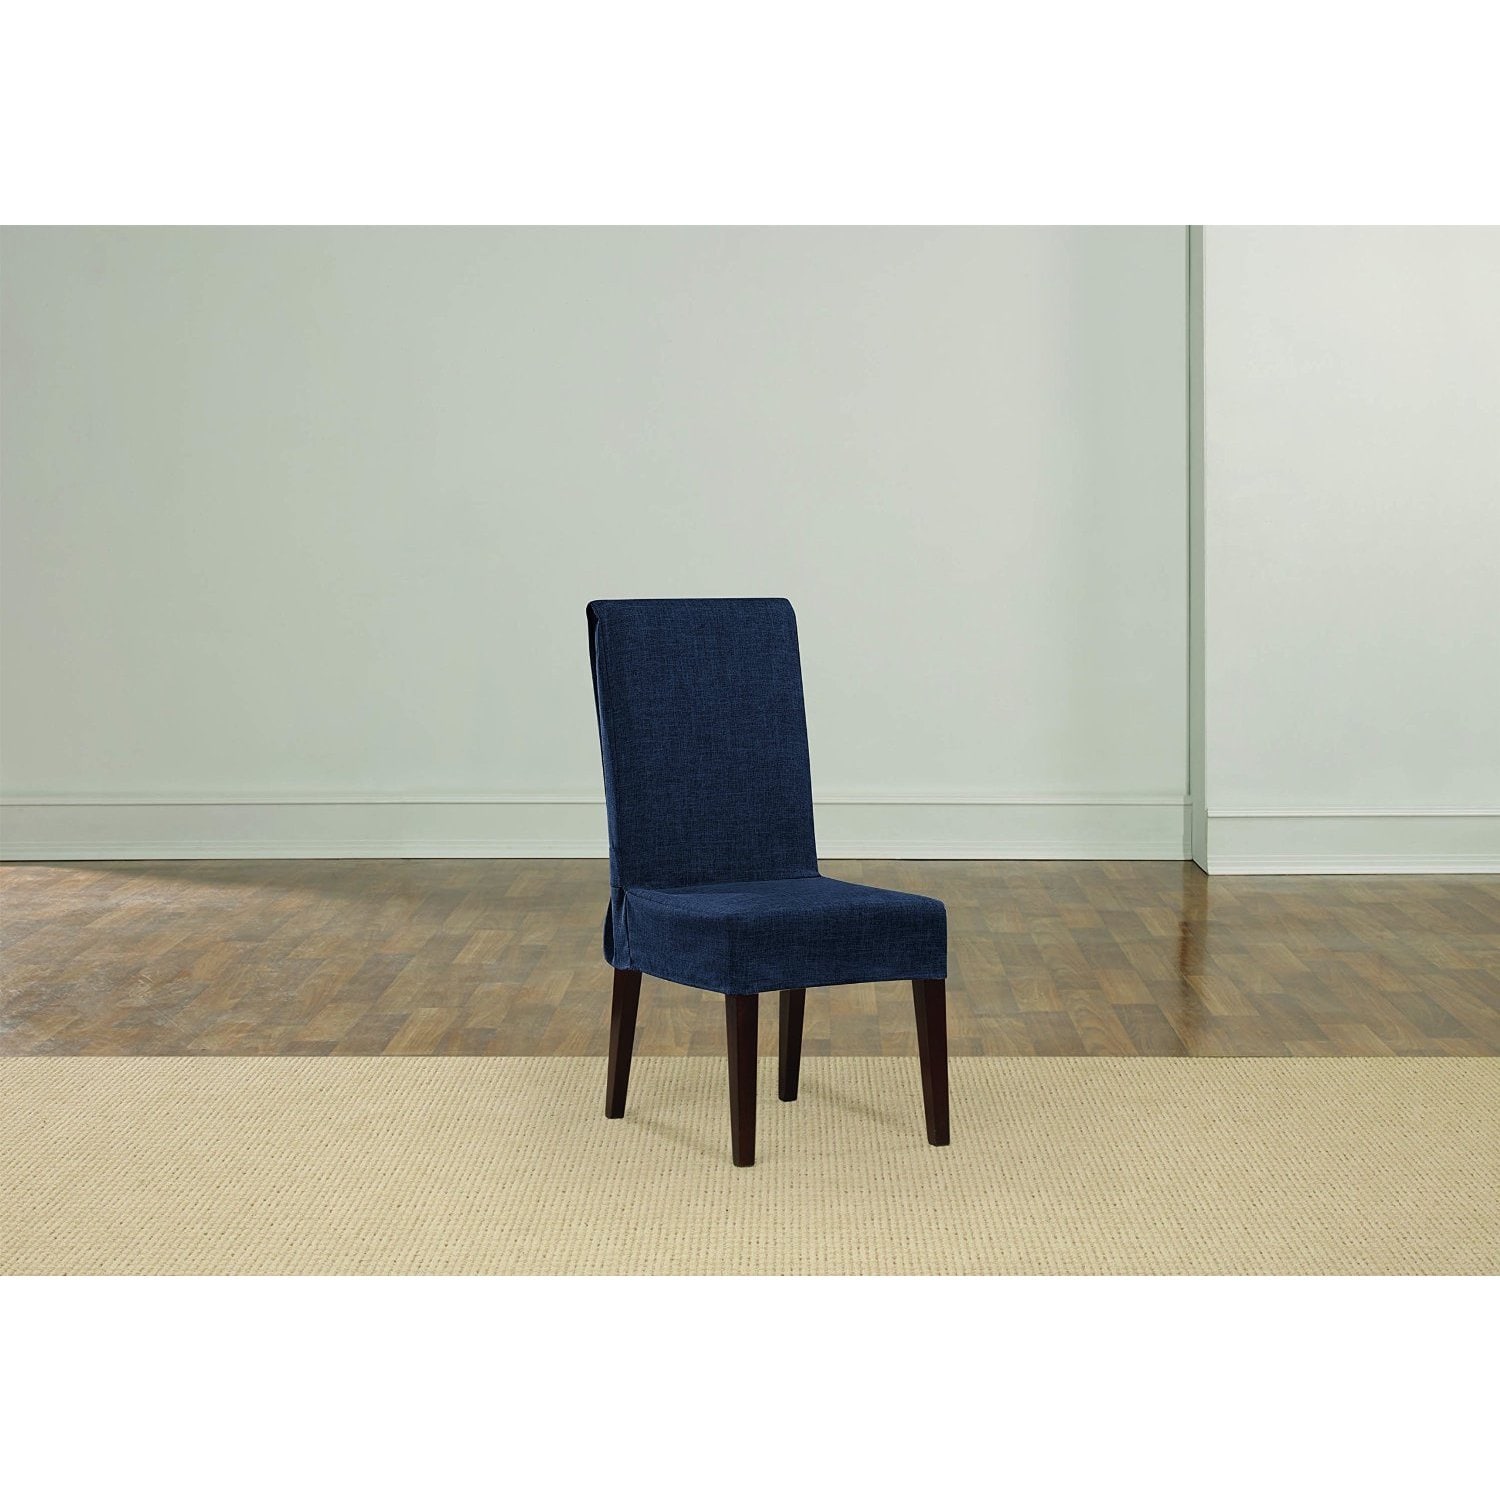 SureFit Duck Short Dining Chair Slipcover - On Sale - Bed Bath & Beyond -  37850286